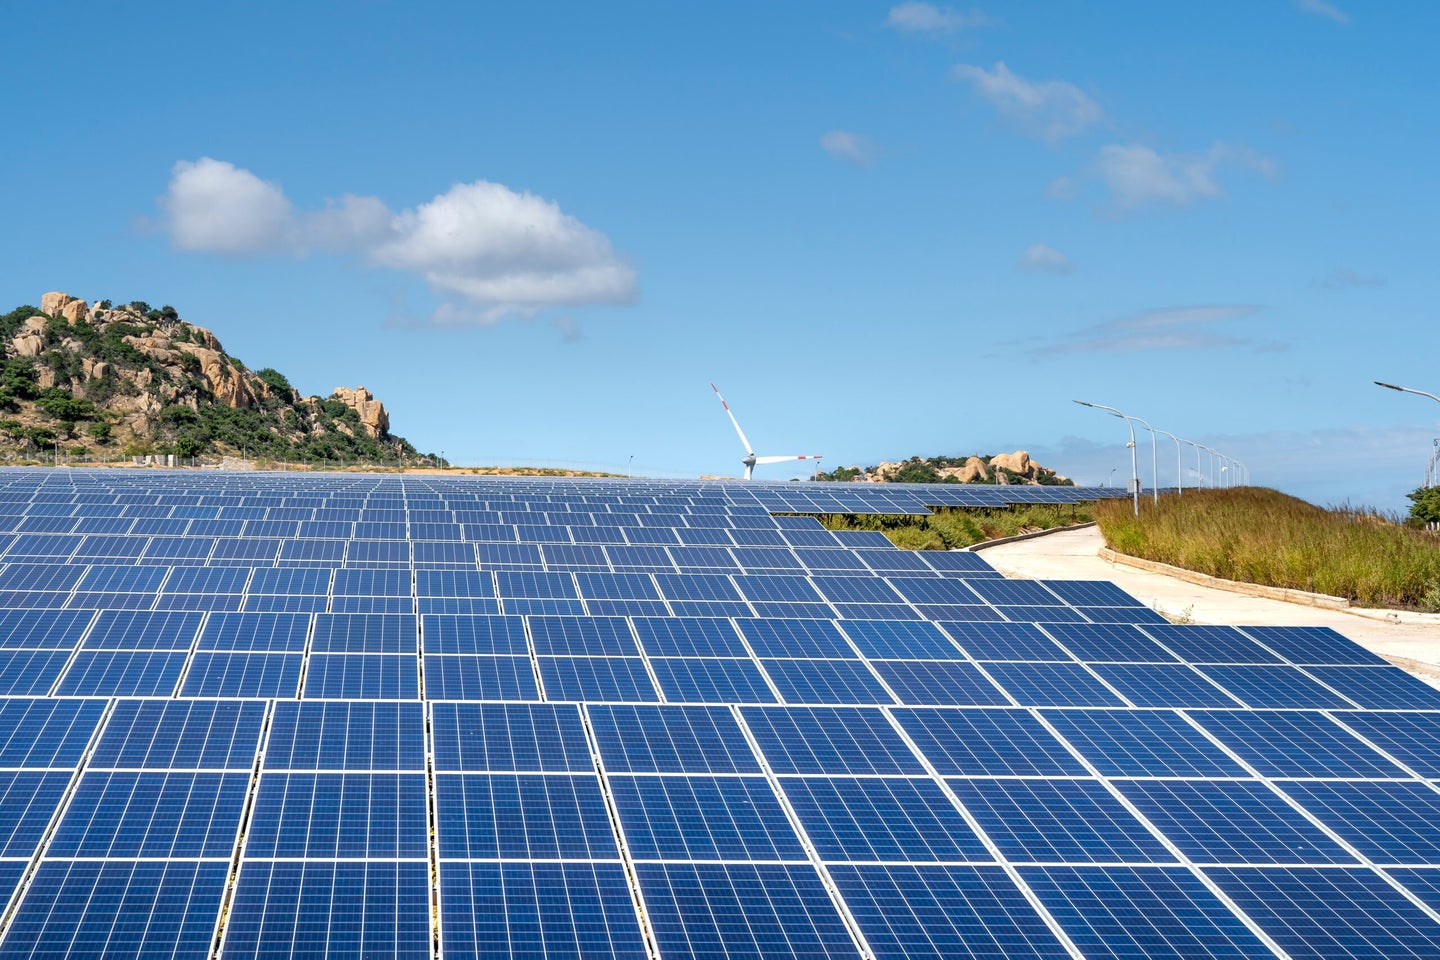 Solar panel farm to represent carbon markets